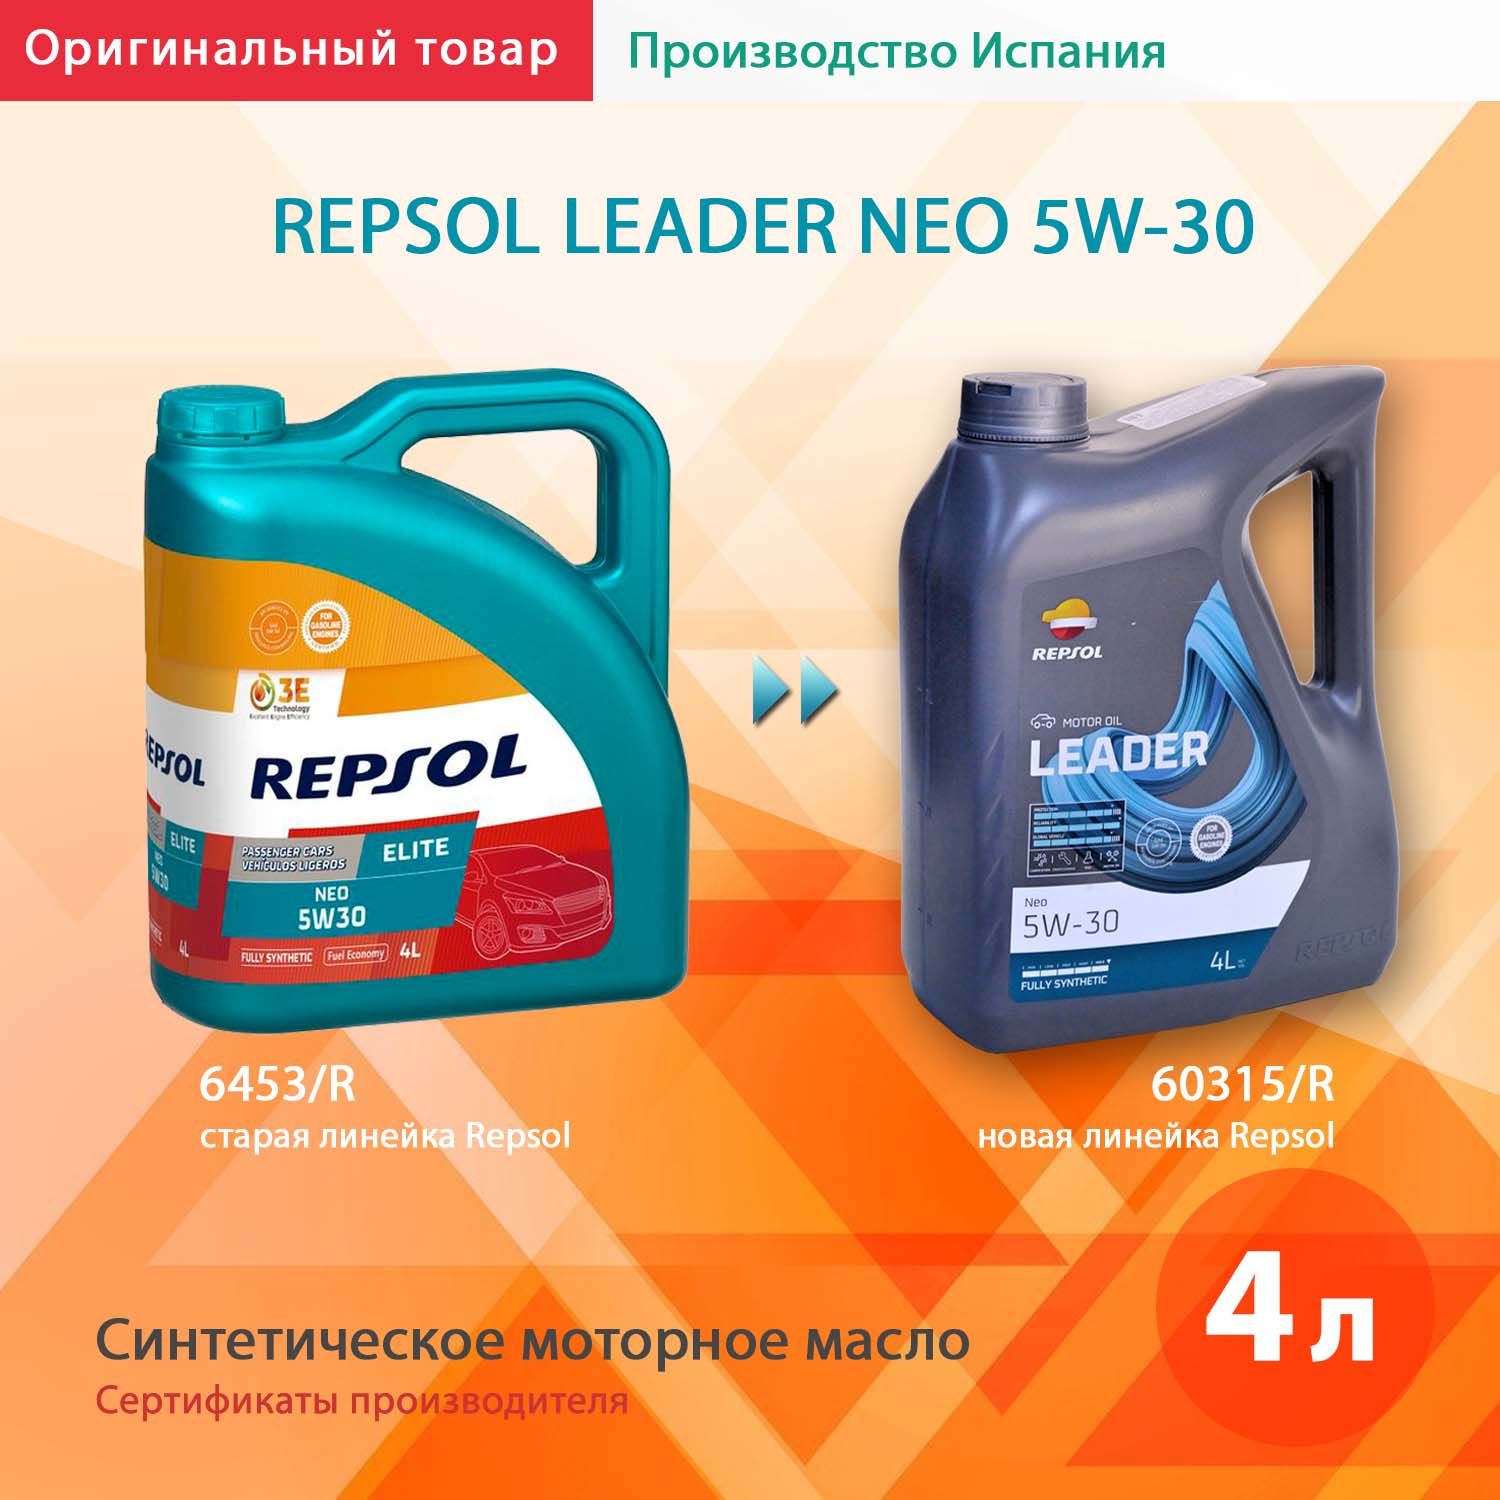 Repsol 5w30. Repsol Elite Neo 5w30. Repsol Elite Neo. Ll Pro Neo leader Light. Масла repsol 5w 30